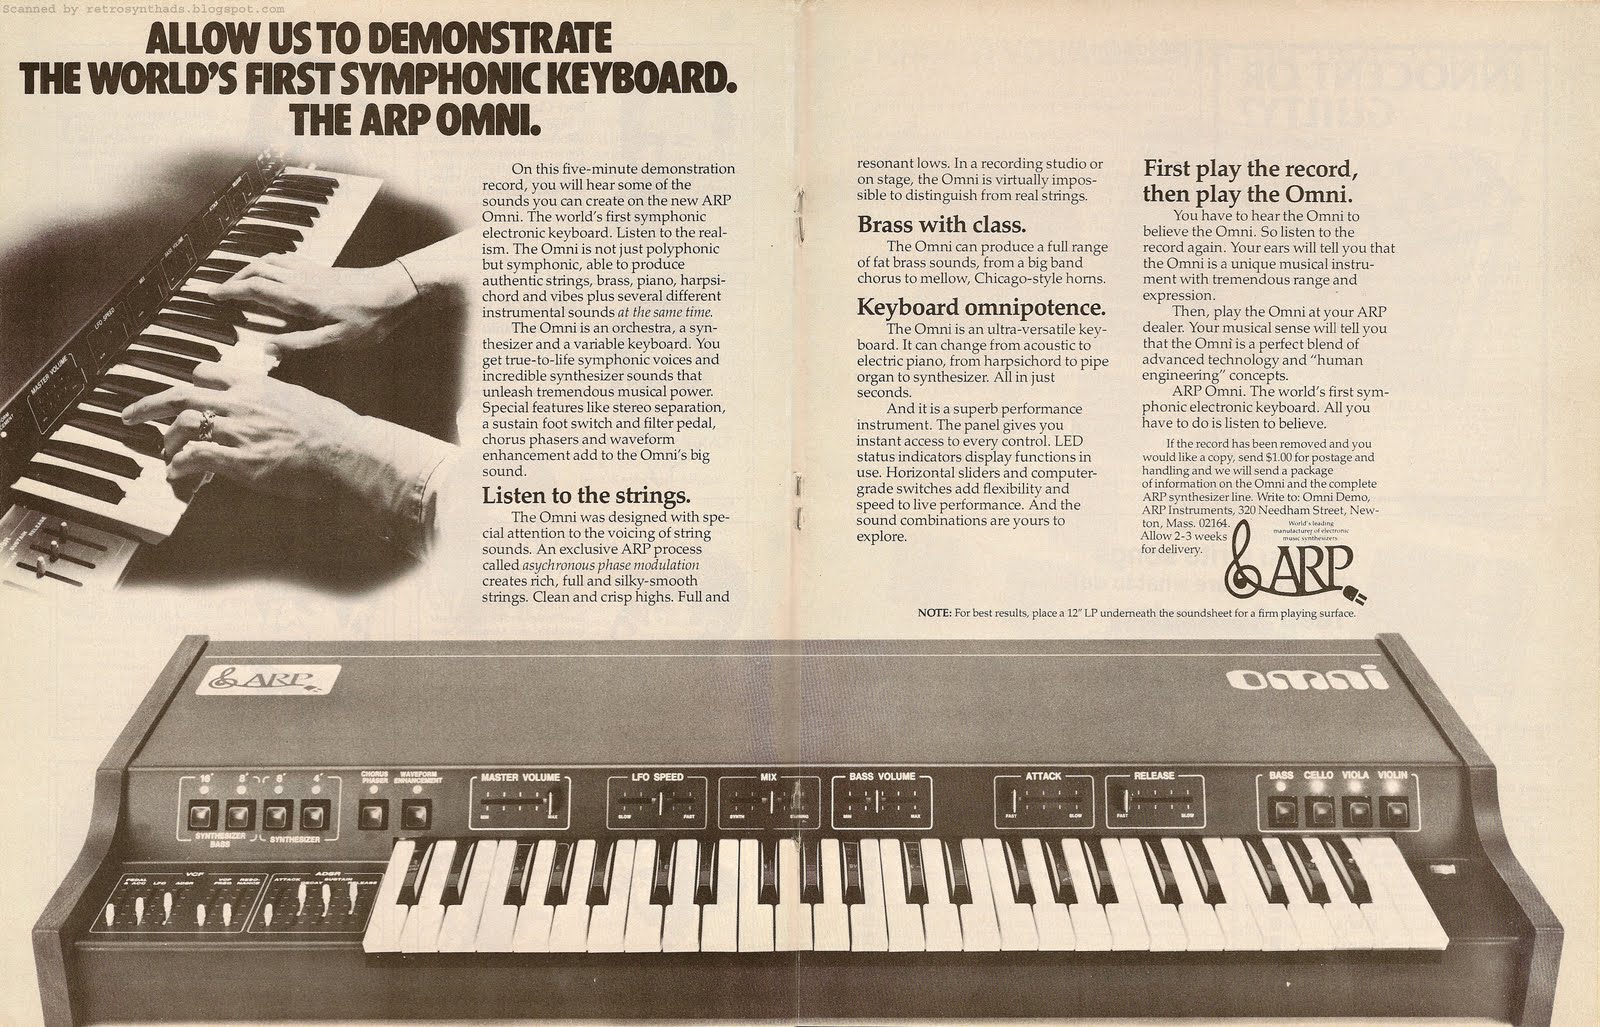 ARP Omni symphonic electronic keyboard, Contemporary Keyboard 1977.